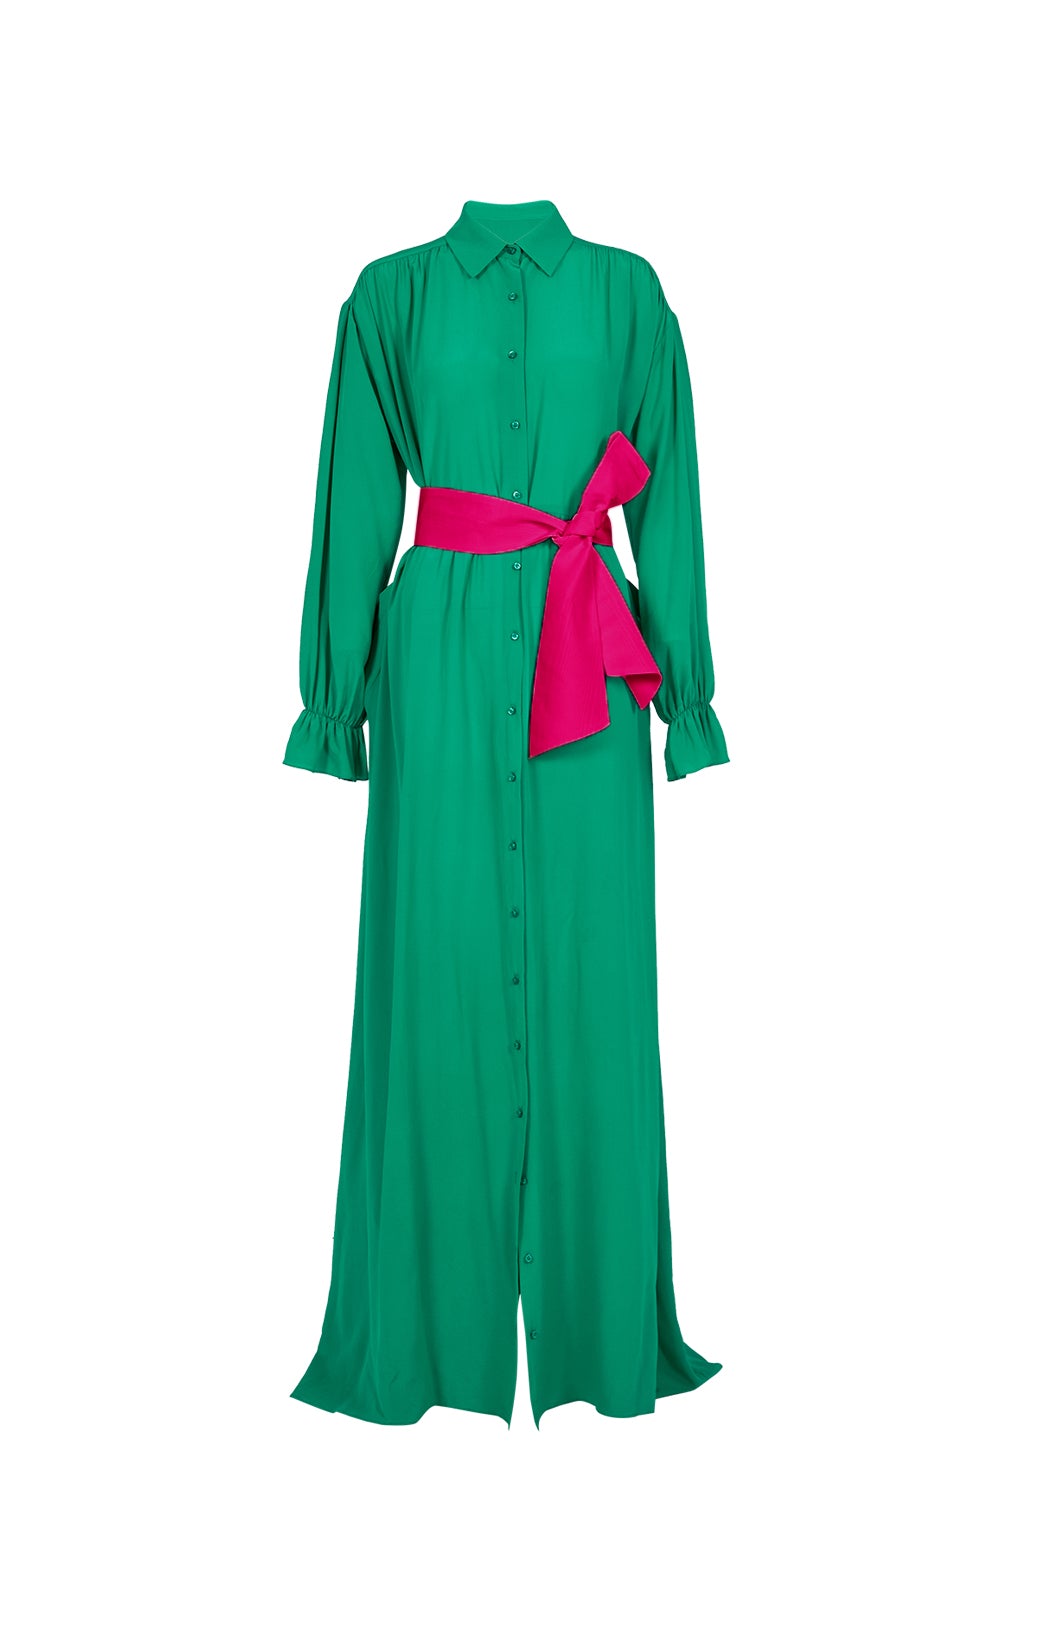 Buy Geranium Belted Silk Dress online - Carlisle Collection